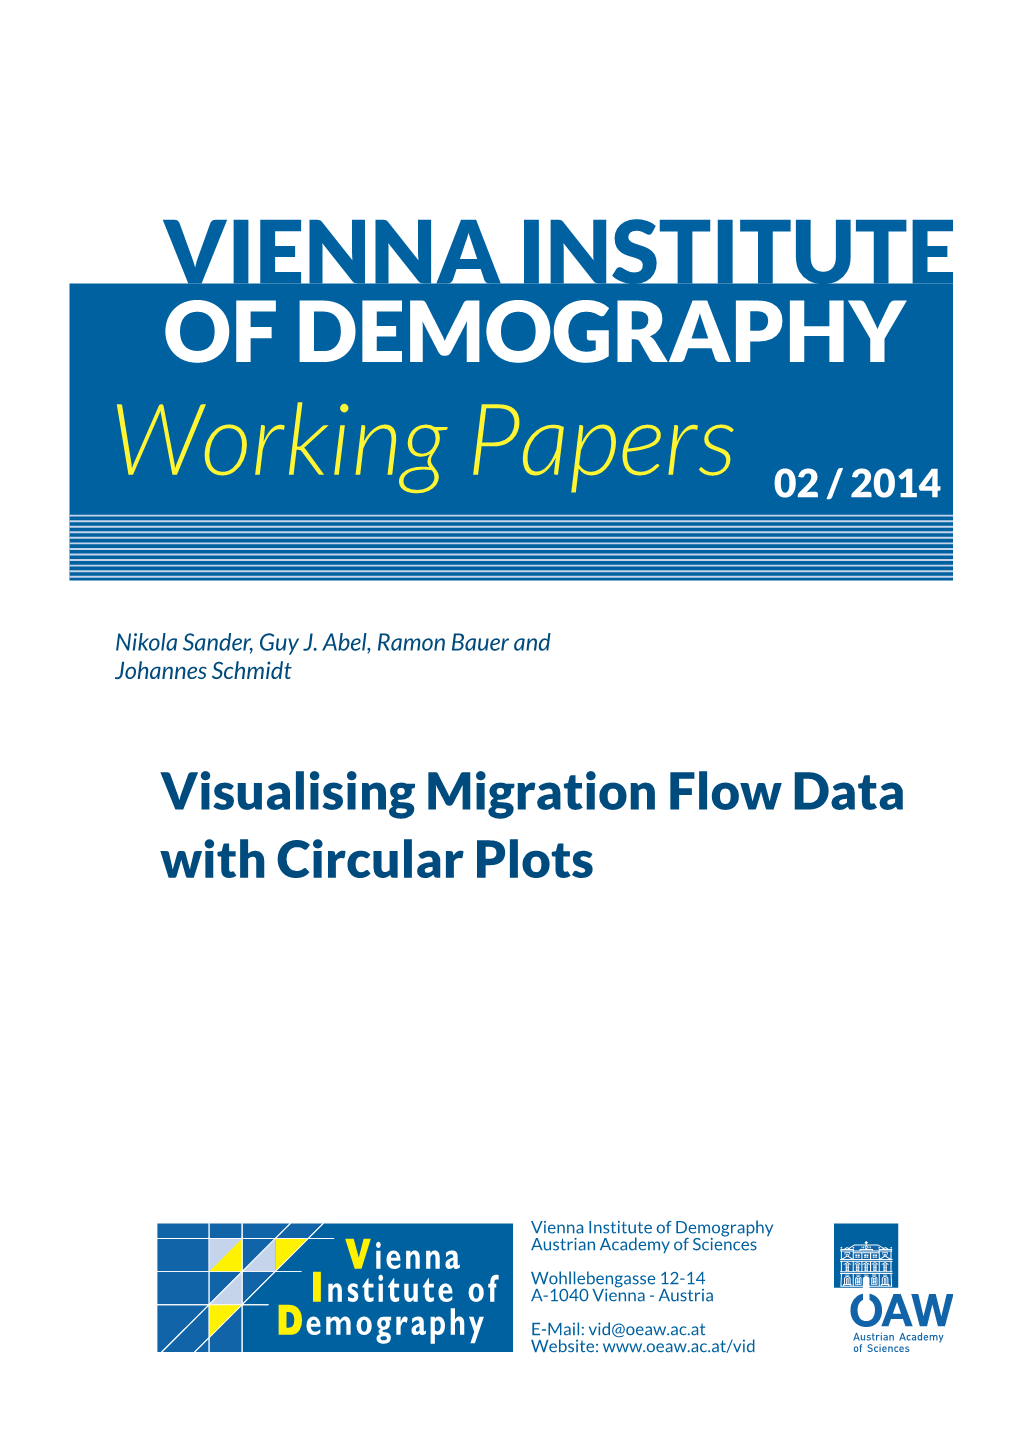 Visualising Migration Flow Data with Circular Plots